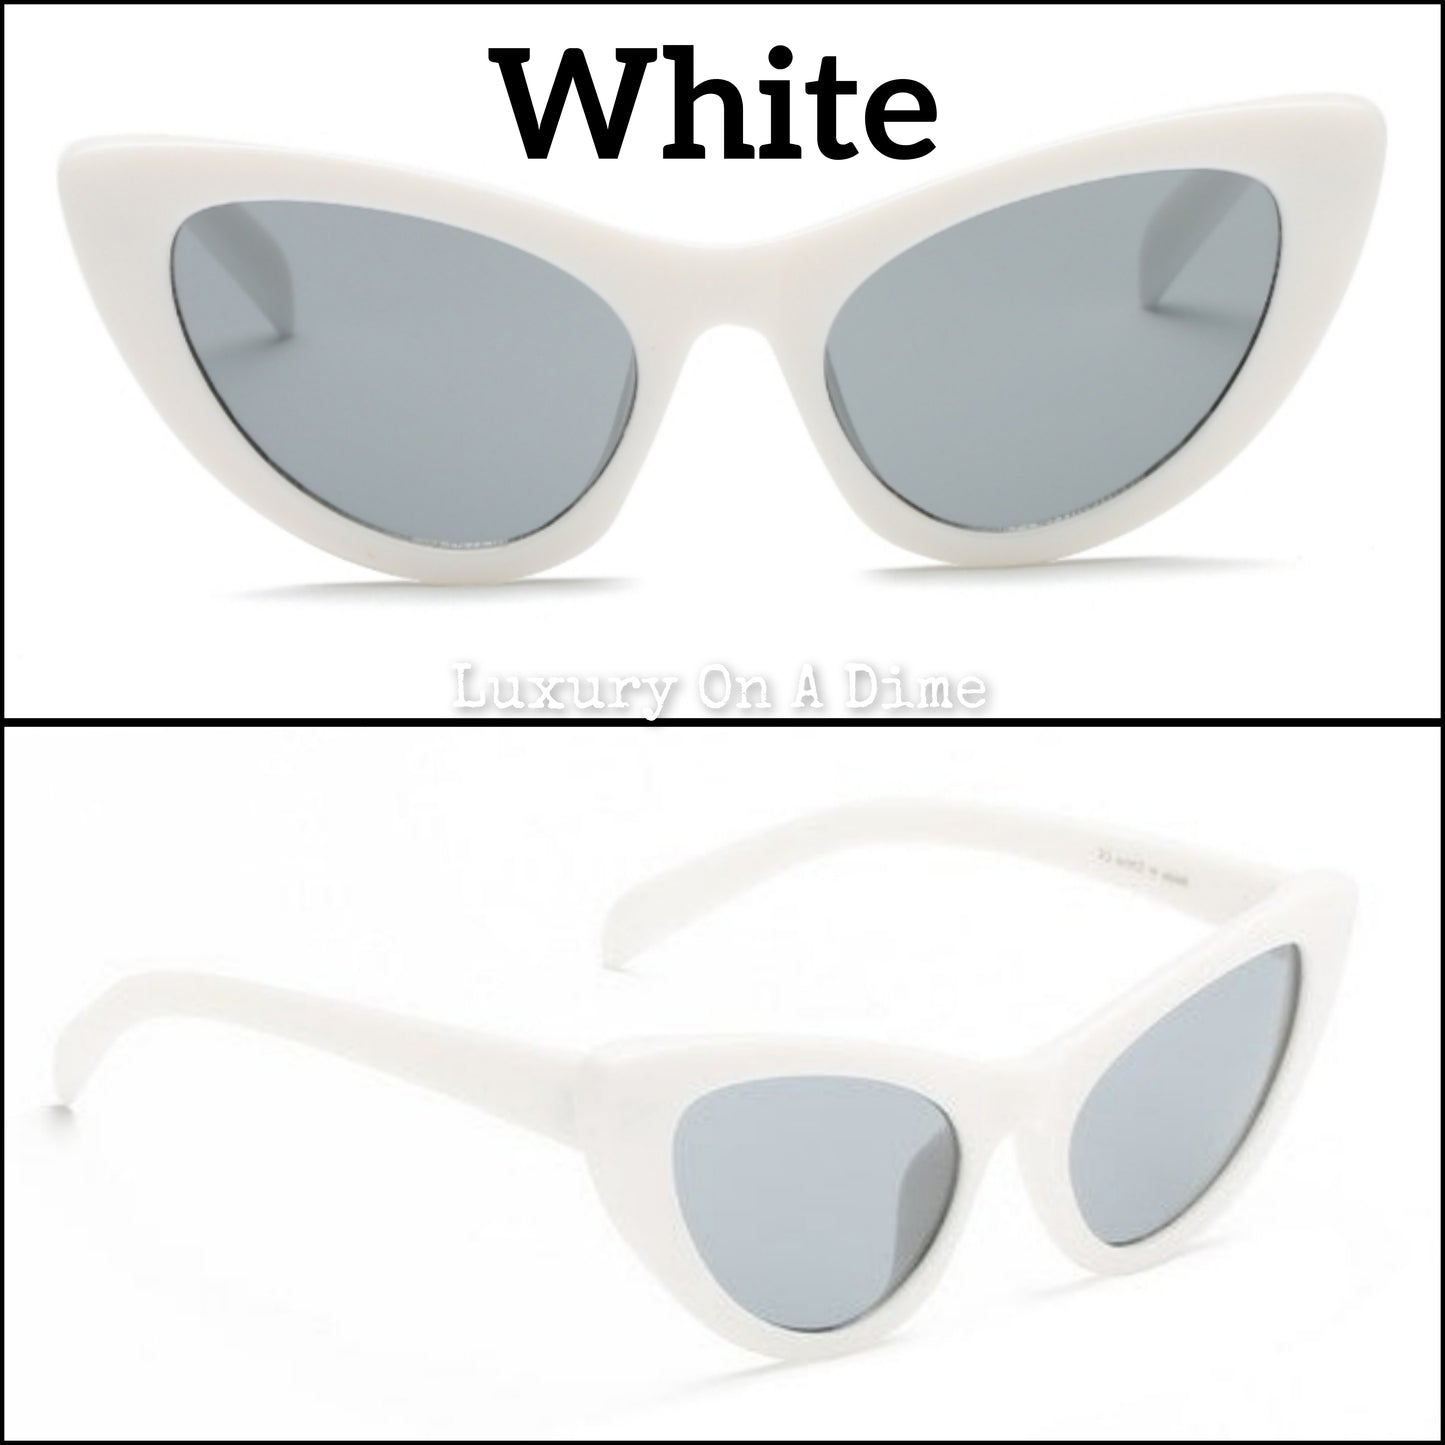 Retro 50s High Point Cat Eye Women's Sunglasses UVA UVB Eye Protection Case Included